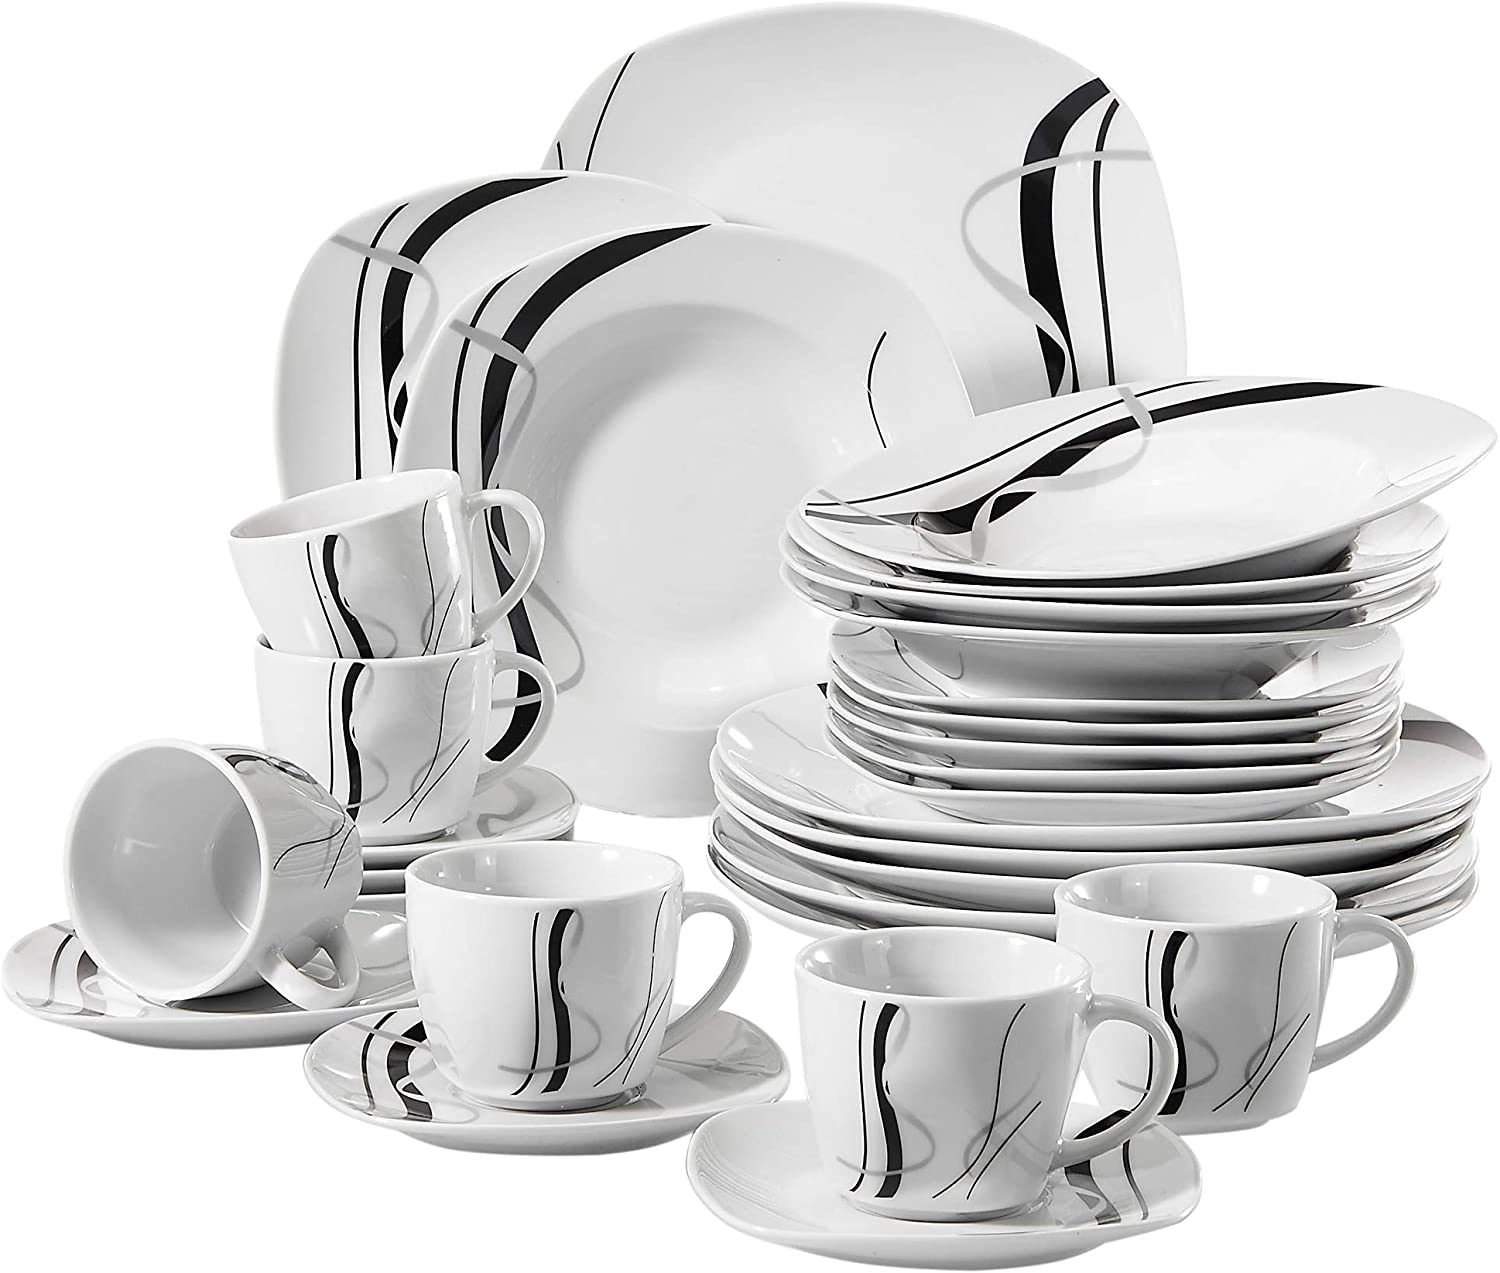 Veweet Fiona Porcelain Dinner Service Set, 18/36-Piece Crockery Set, 20/4